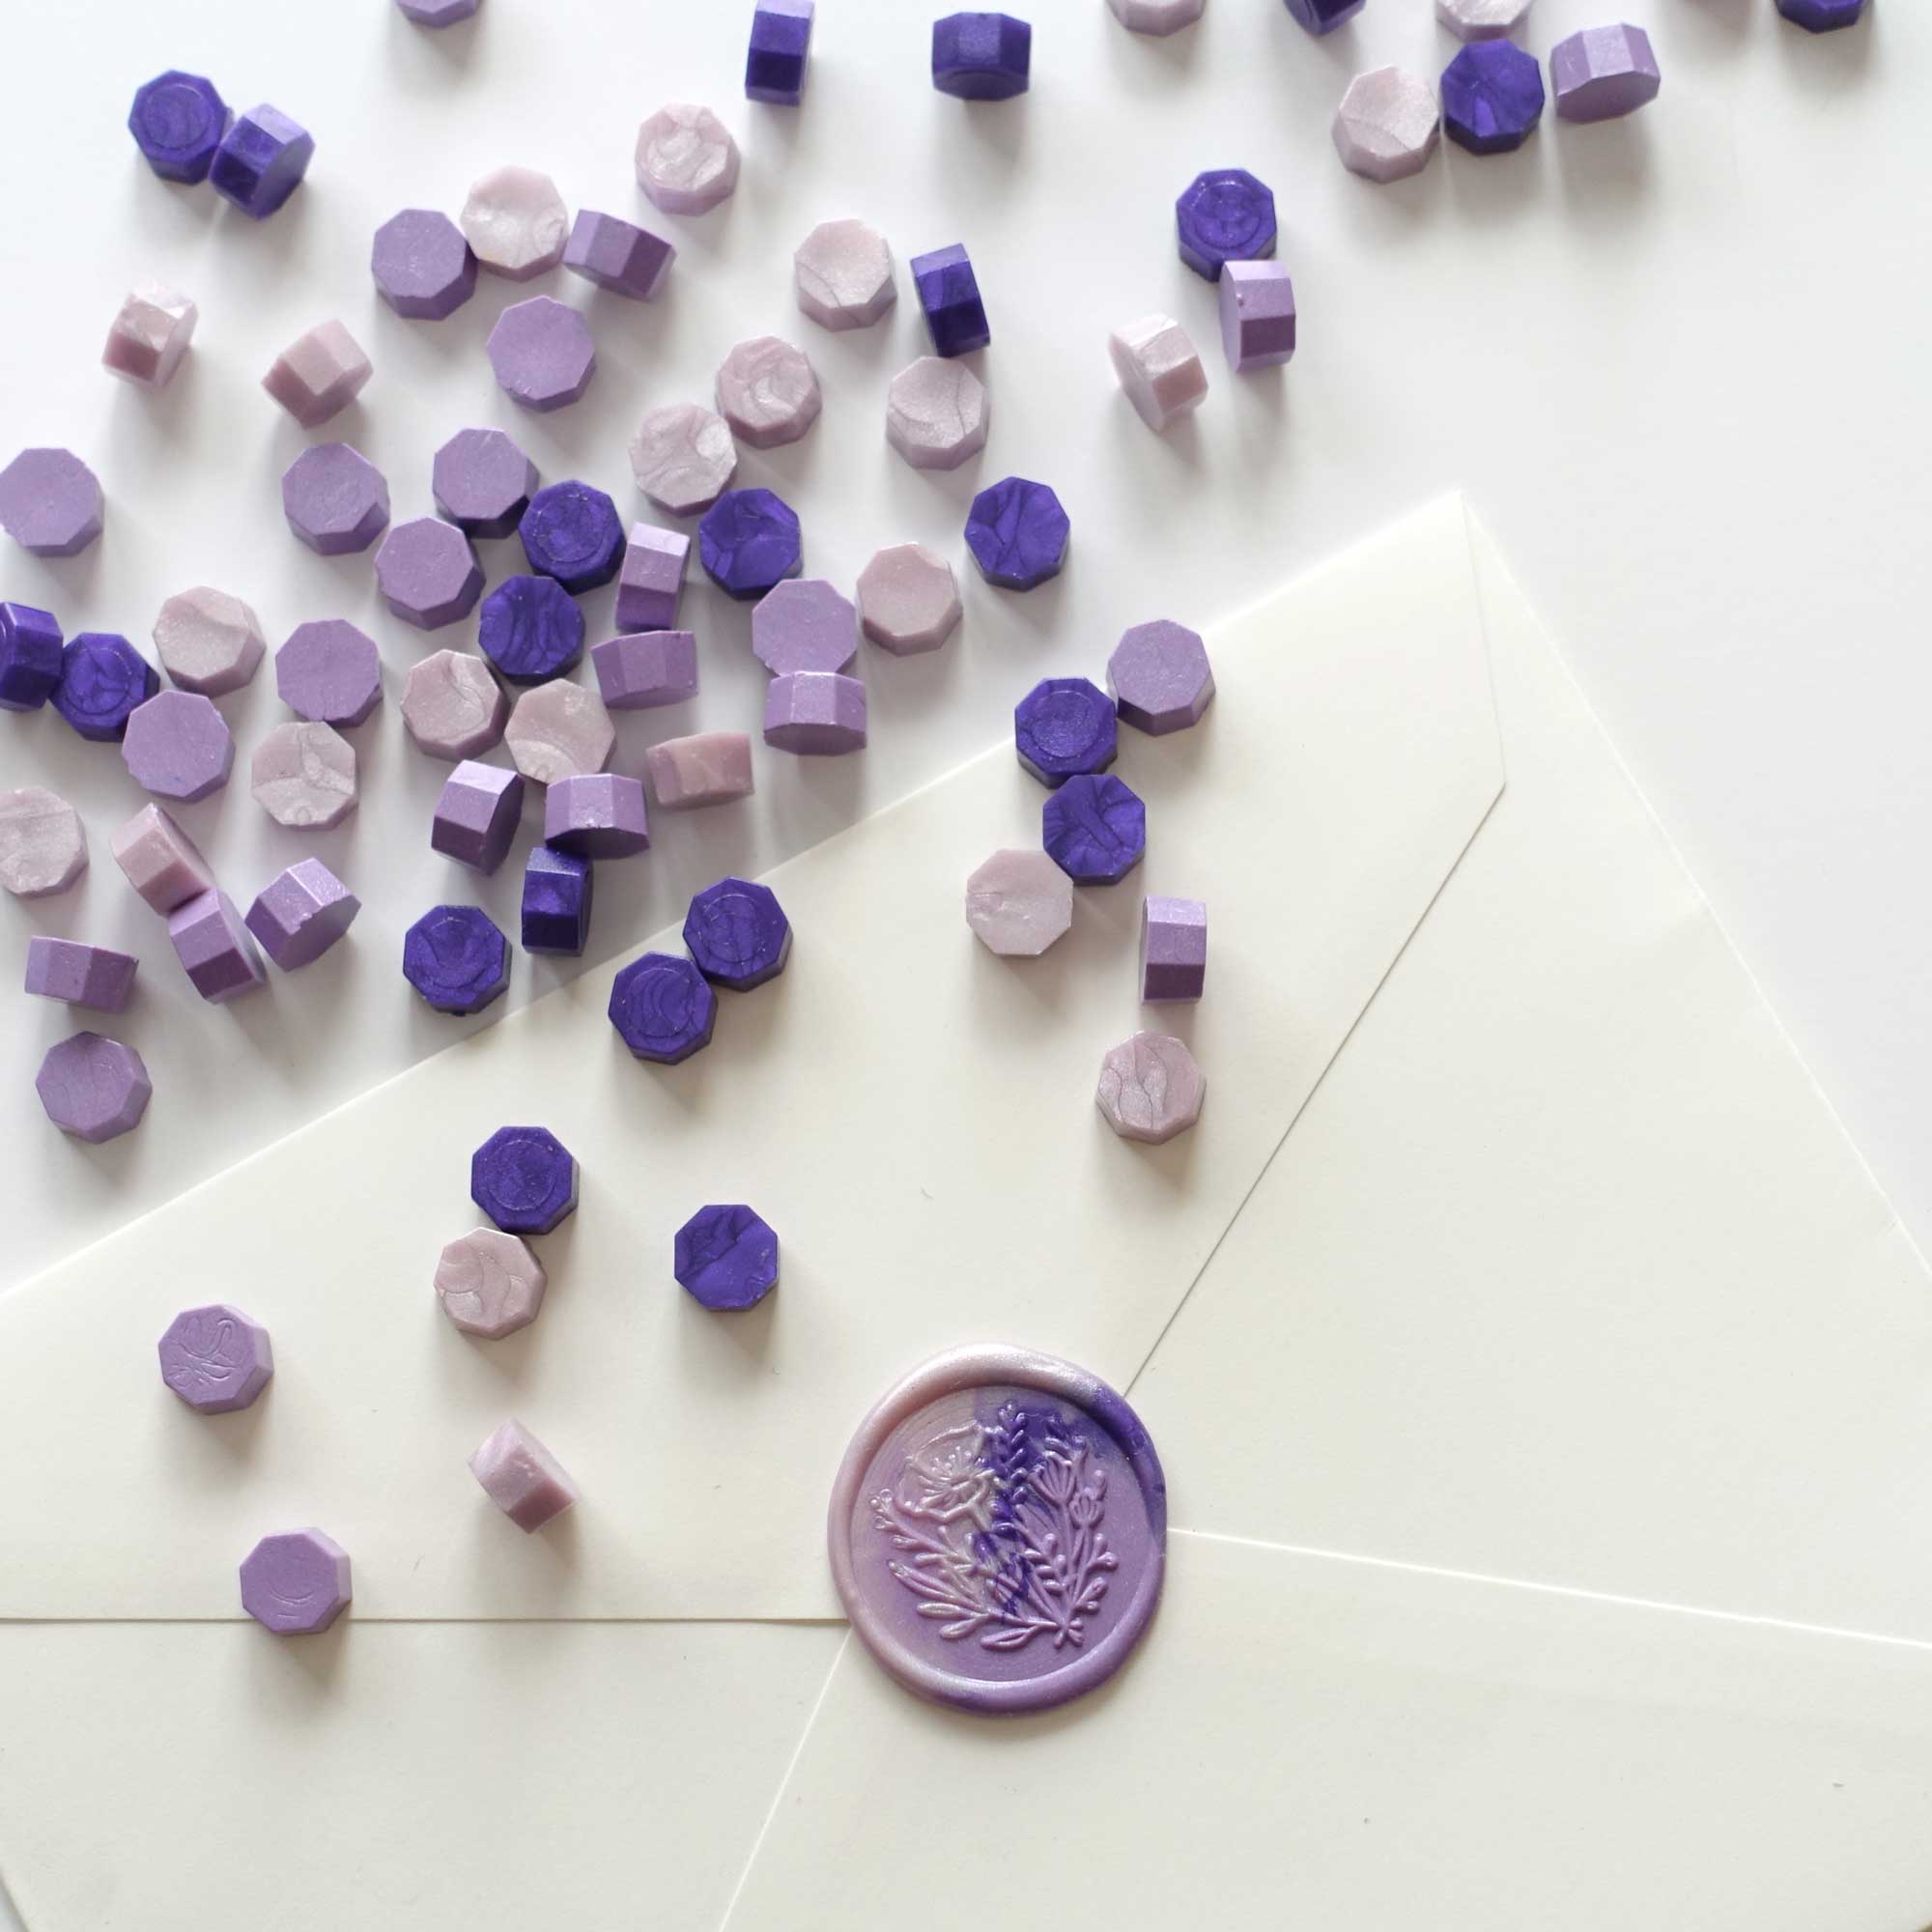 Mixed purple lavender lilac sealing wax seal beads pellets Melbourne Sydney Australia envelopes